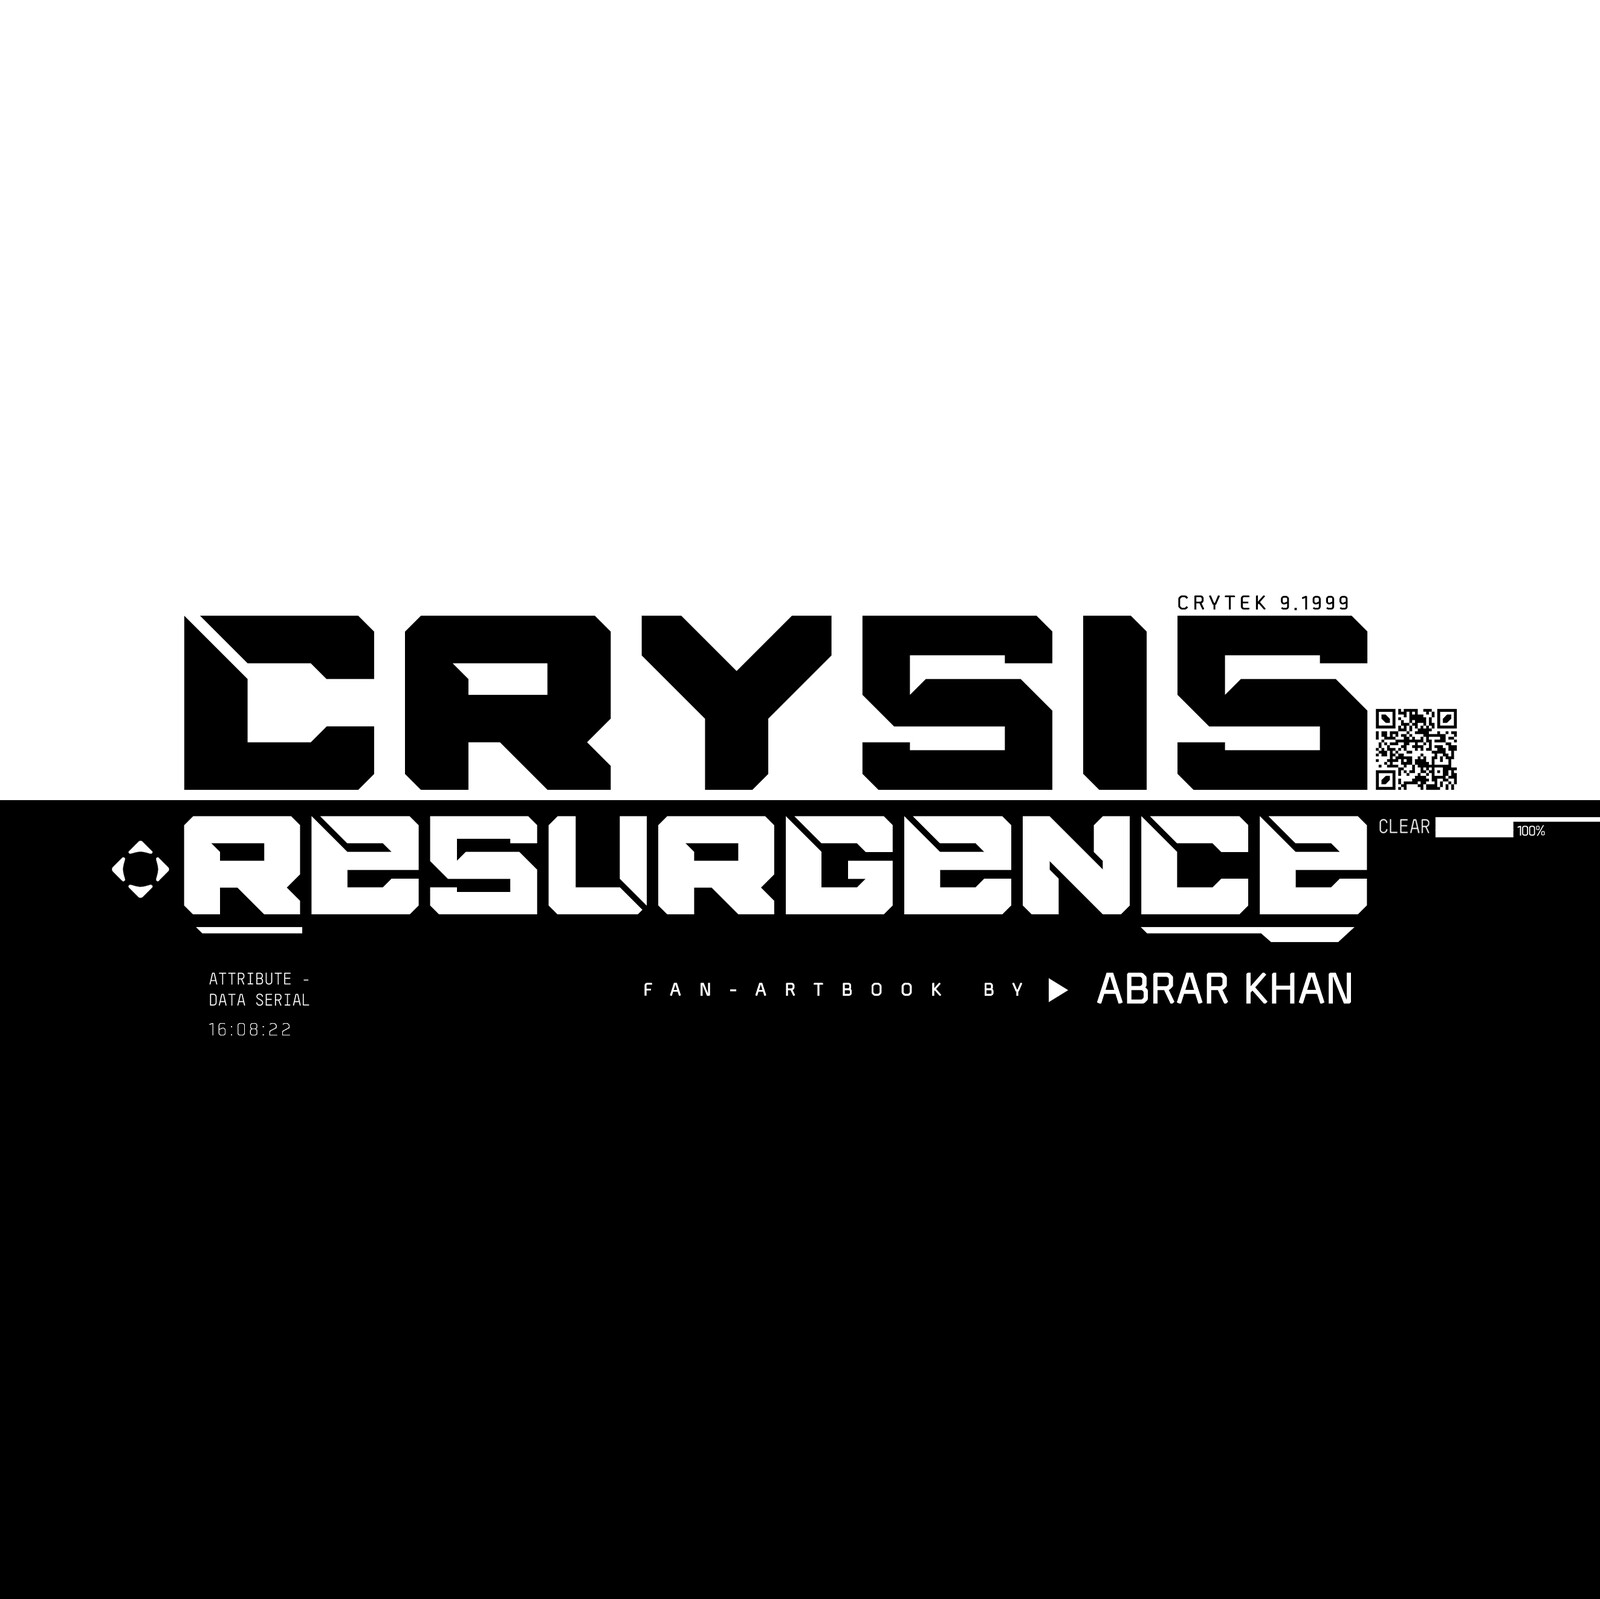 CRYSIS RESURGENCE - FAN-ARTBOOK 